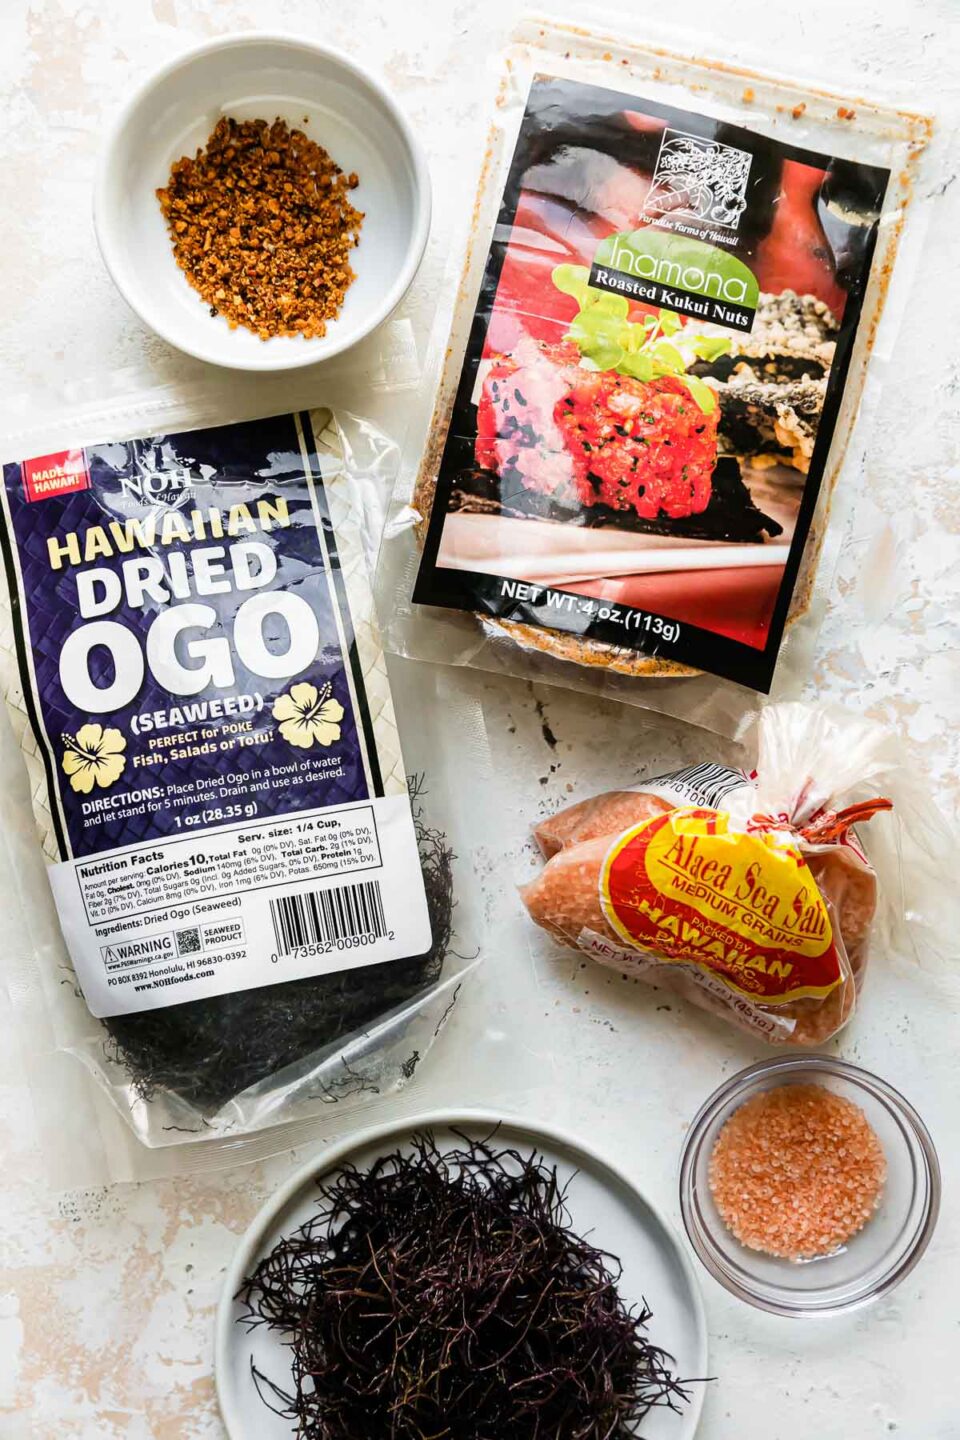 Ahi poke ingredients arranged on a creamy white textured surface: Inamona, Hawaiian dried ogo, and Hawaiian sea salt.